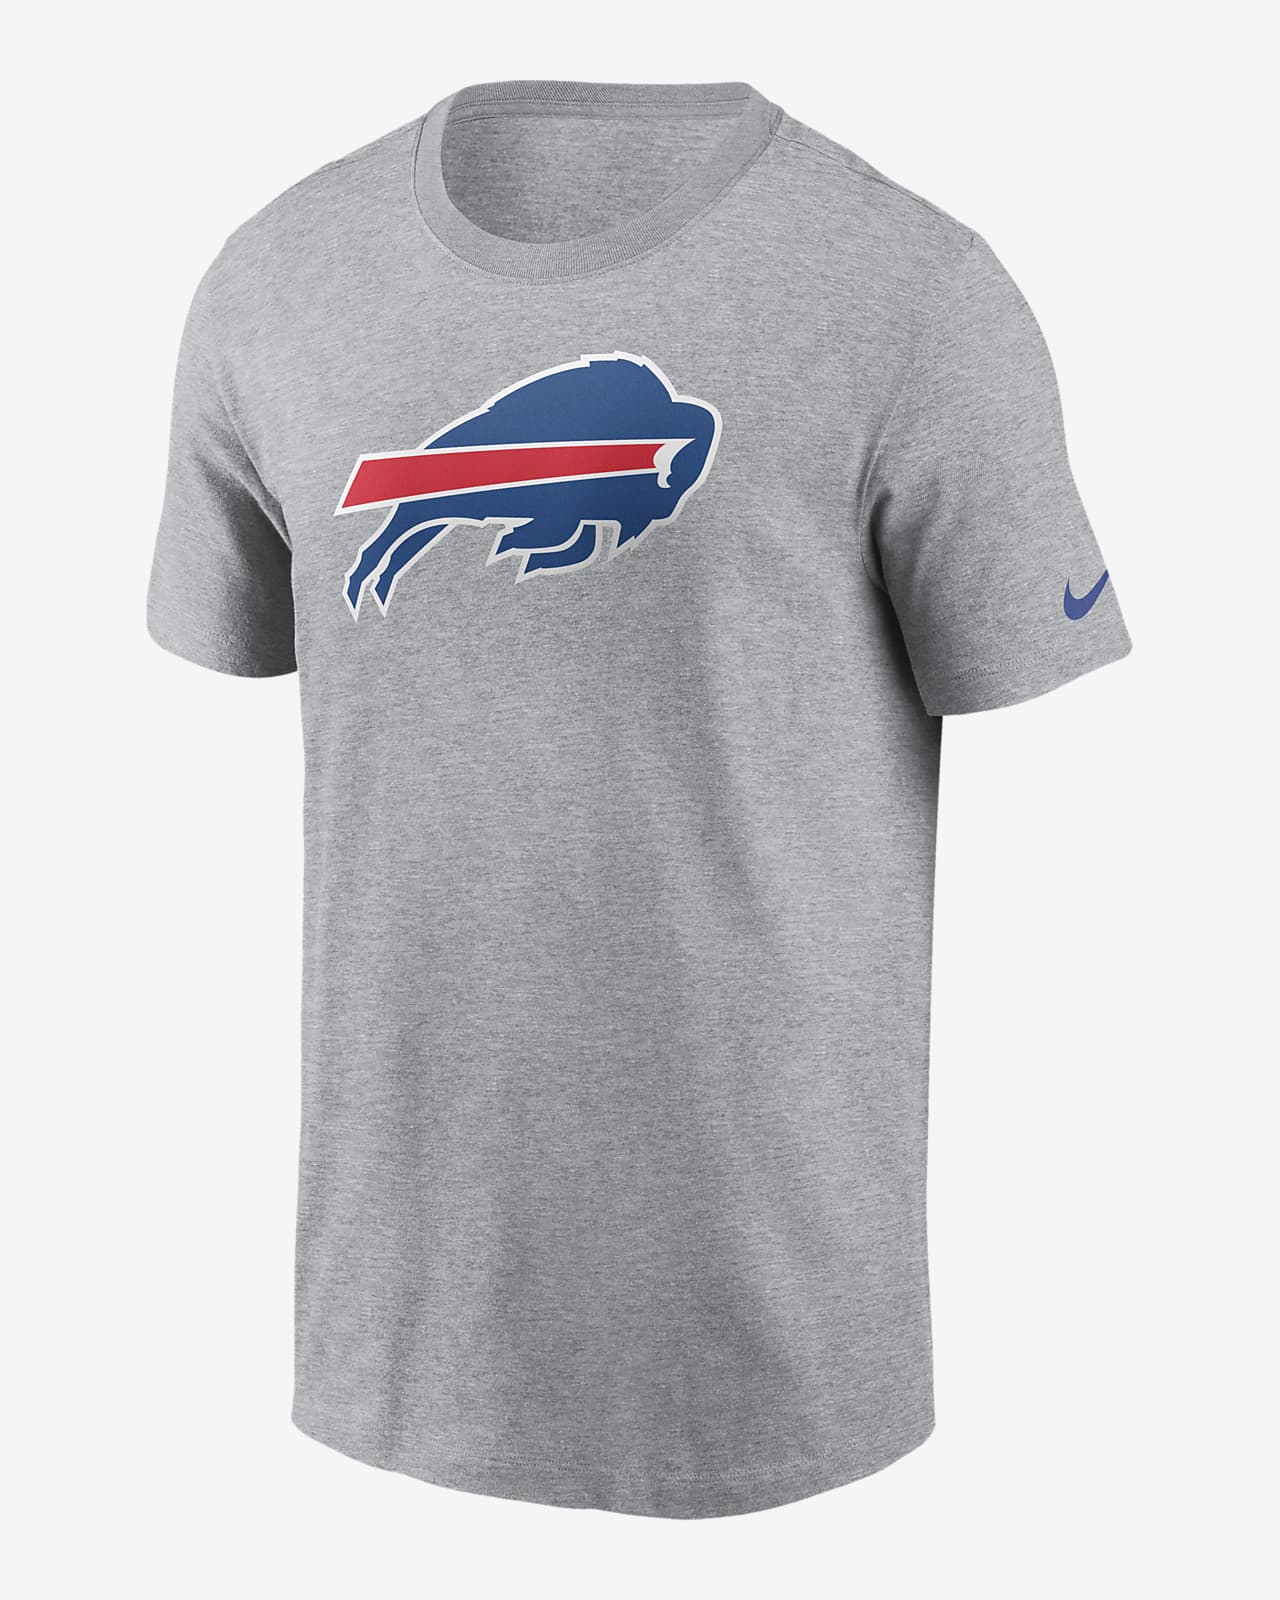 Men's Nike Gray Buffalo Bills Logo Essential T-Shirt Size: Small